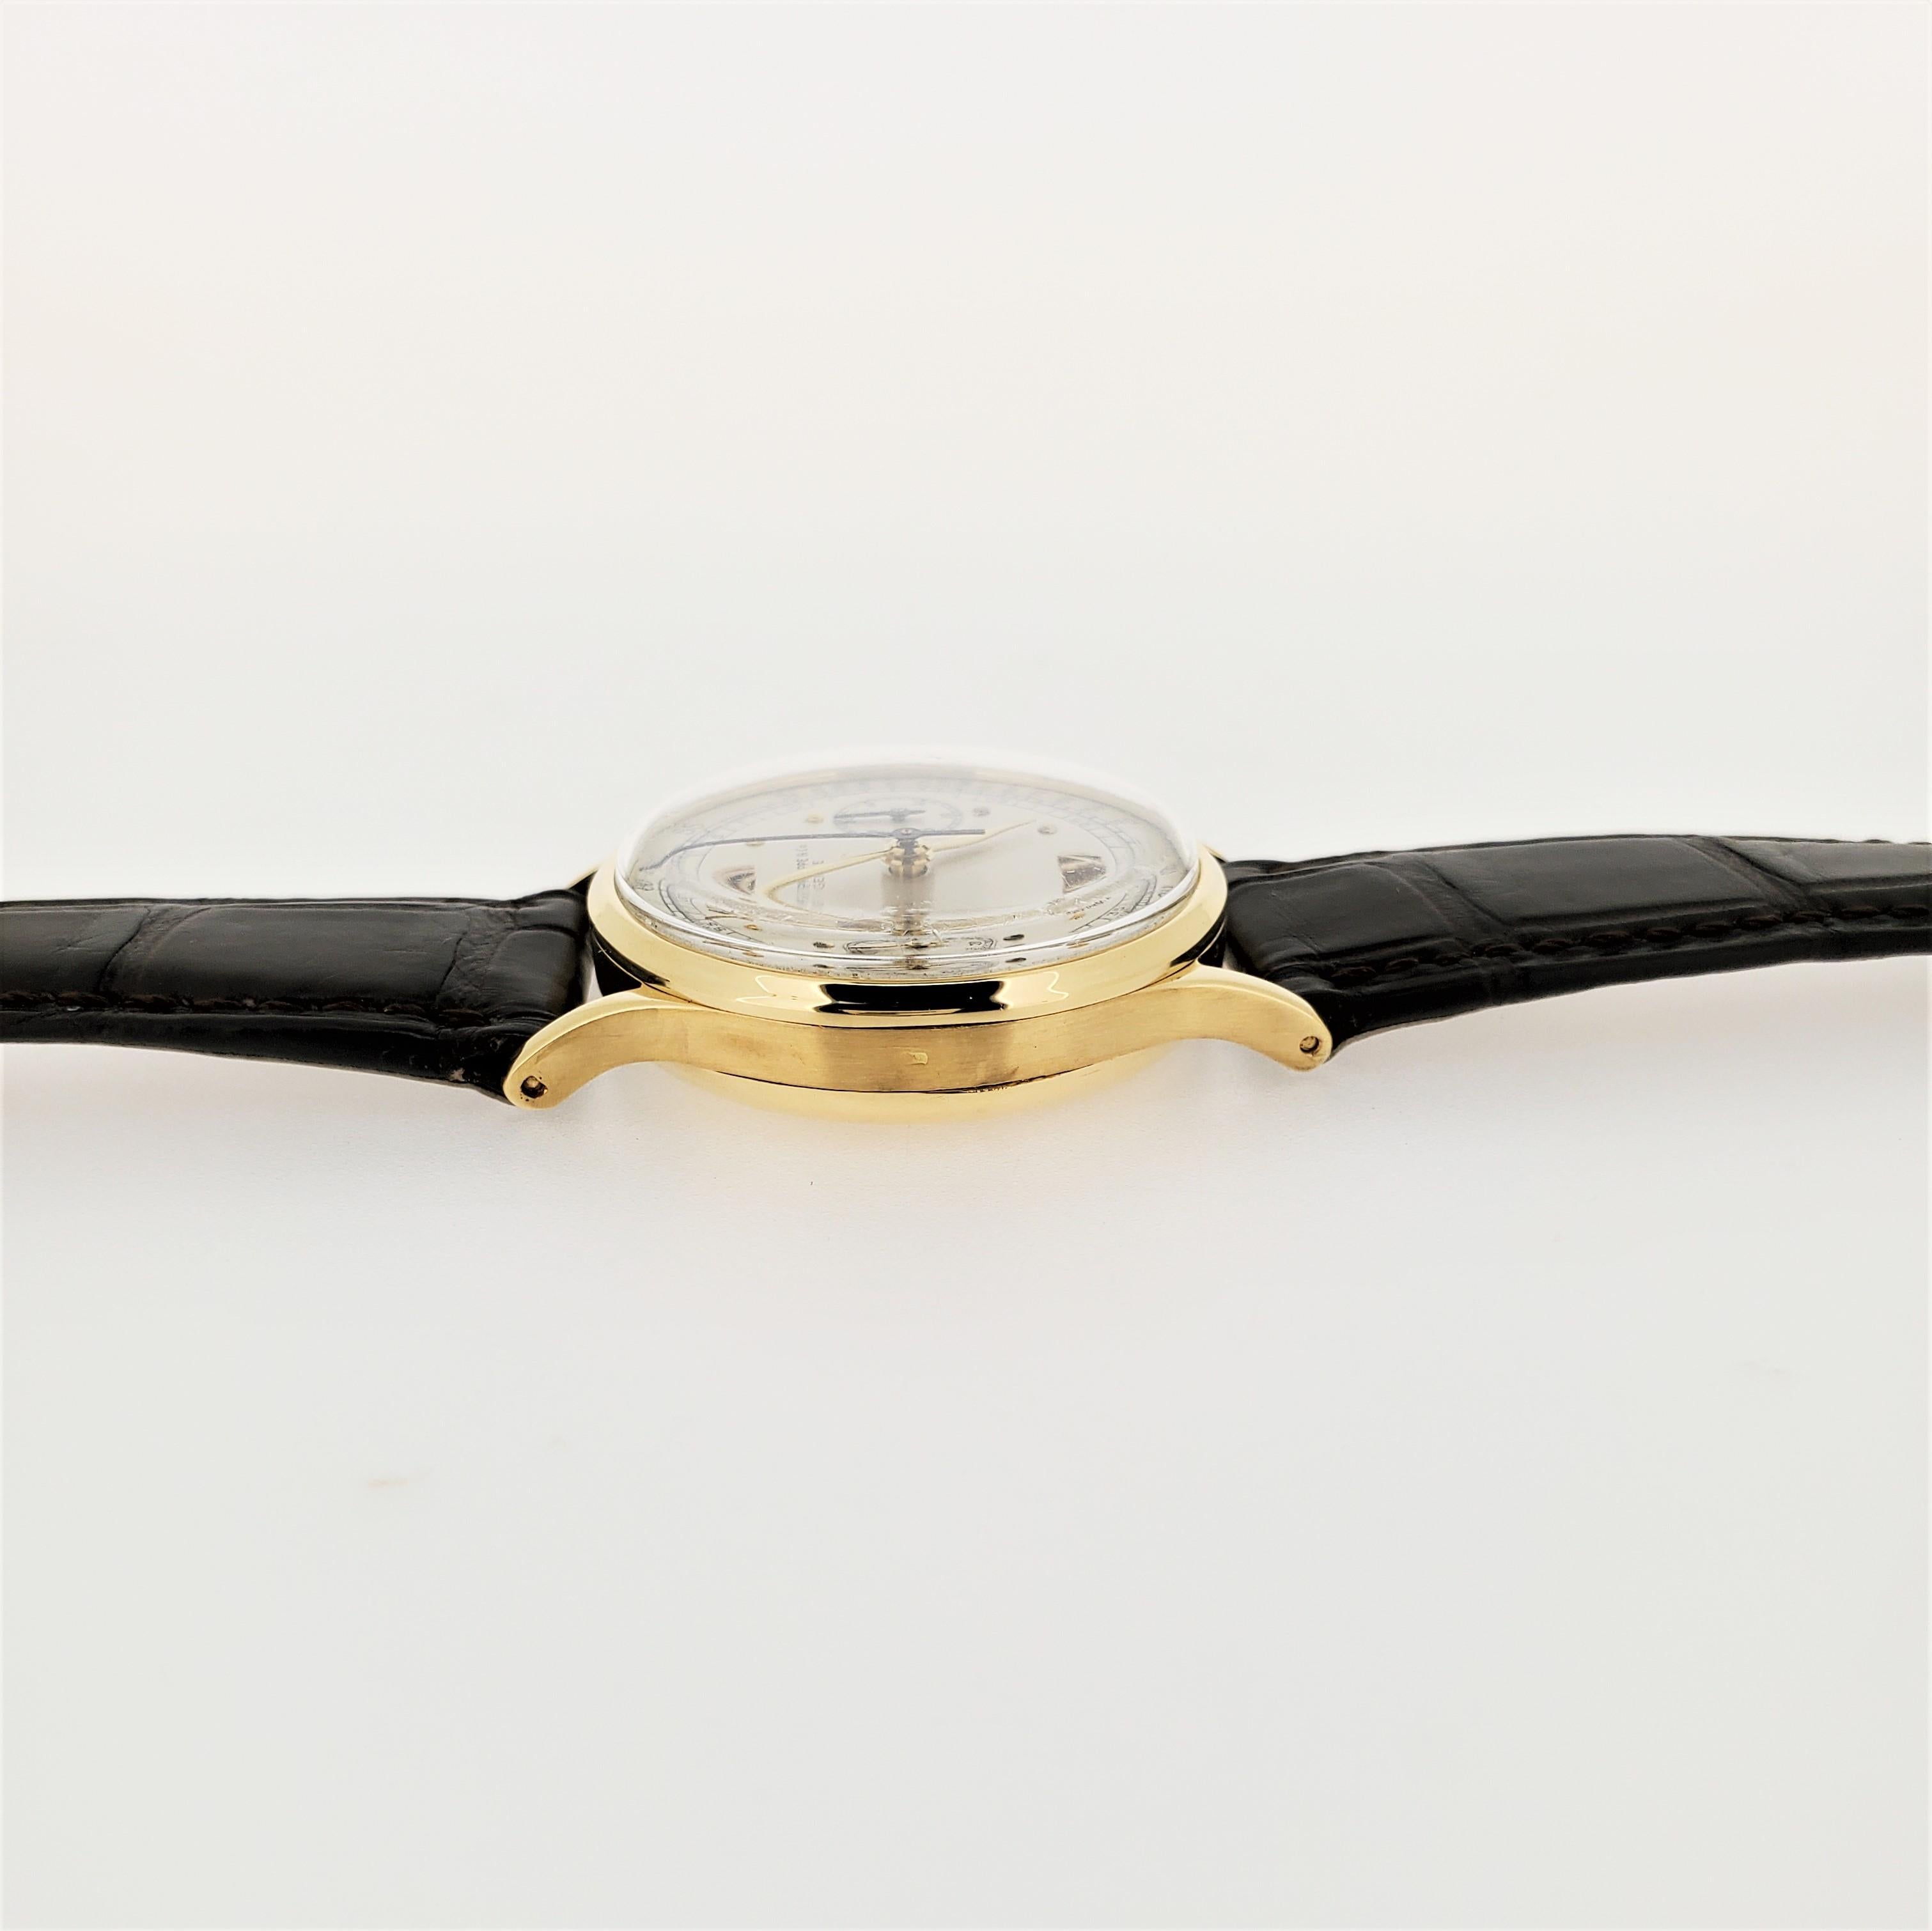 Patek Philippe 130J Vintage Chronograph Watch, Circa 1940 7